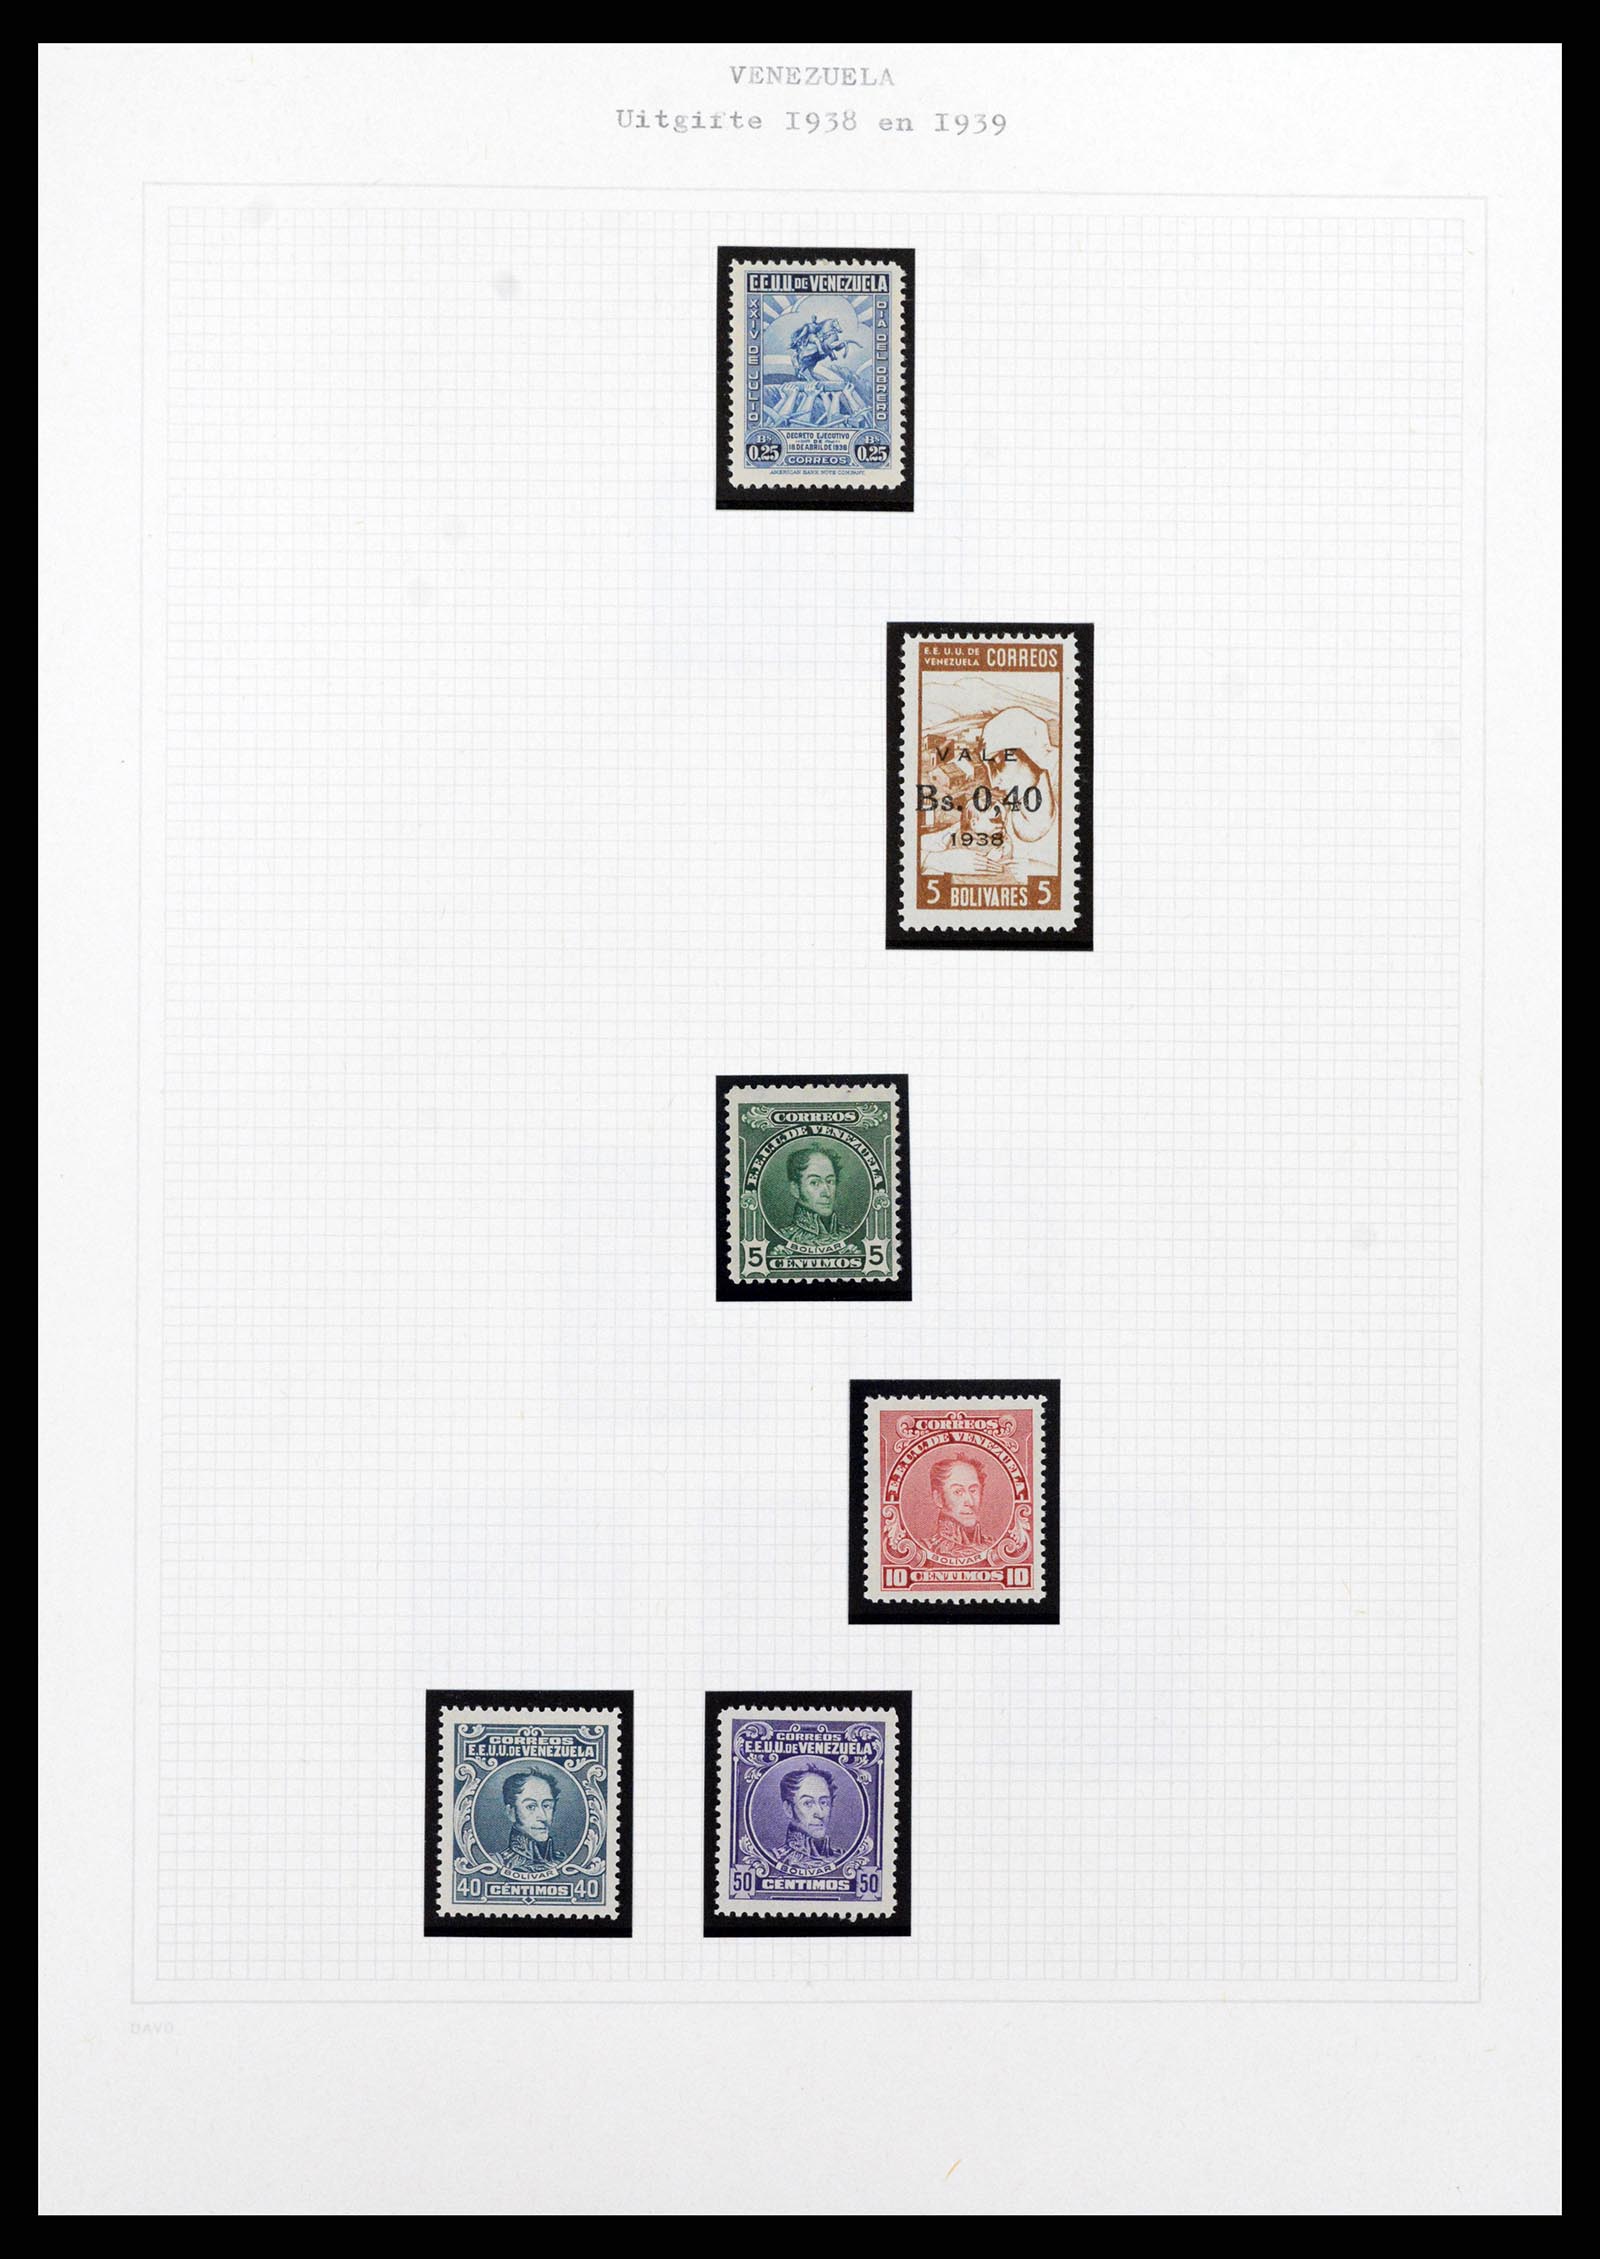 37353 017 - Stamp collection 37353 Venezuela 1880-1960.